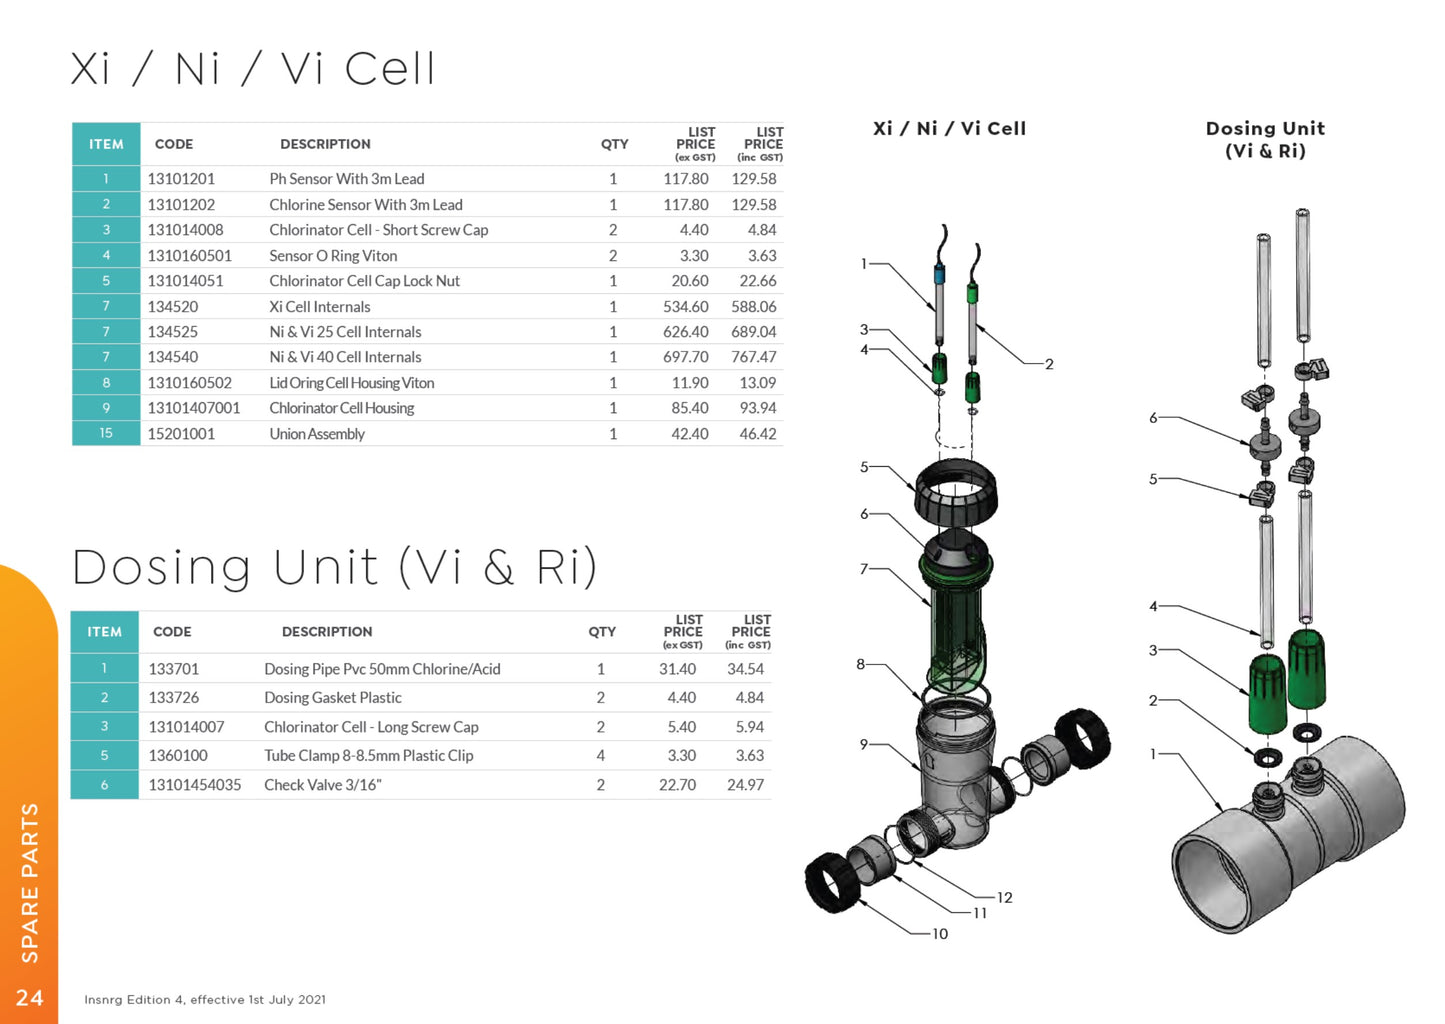 25g Chlorinator Cell Complete - Insnrg Ni & Vi Chlorinators (Ni25/Vi25) [13235025, Barcode 0722583]